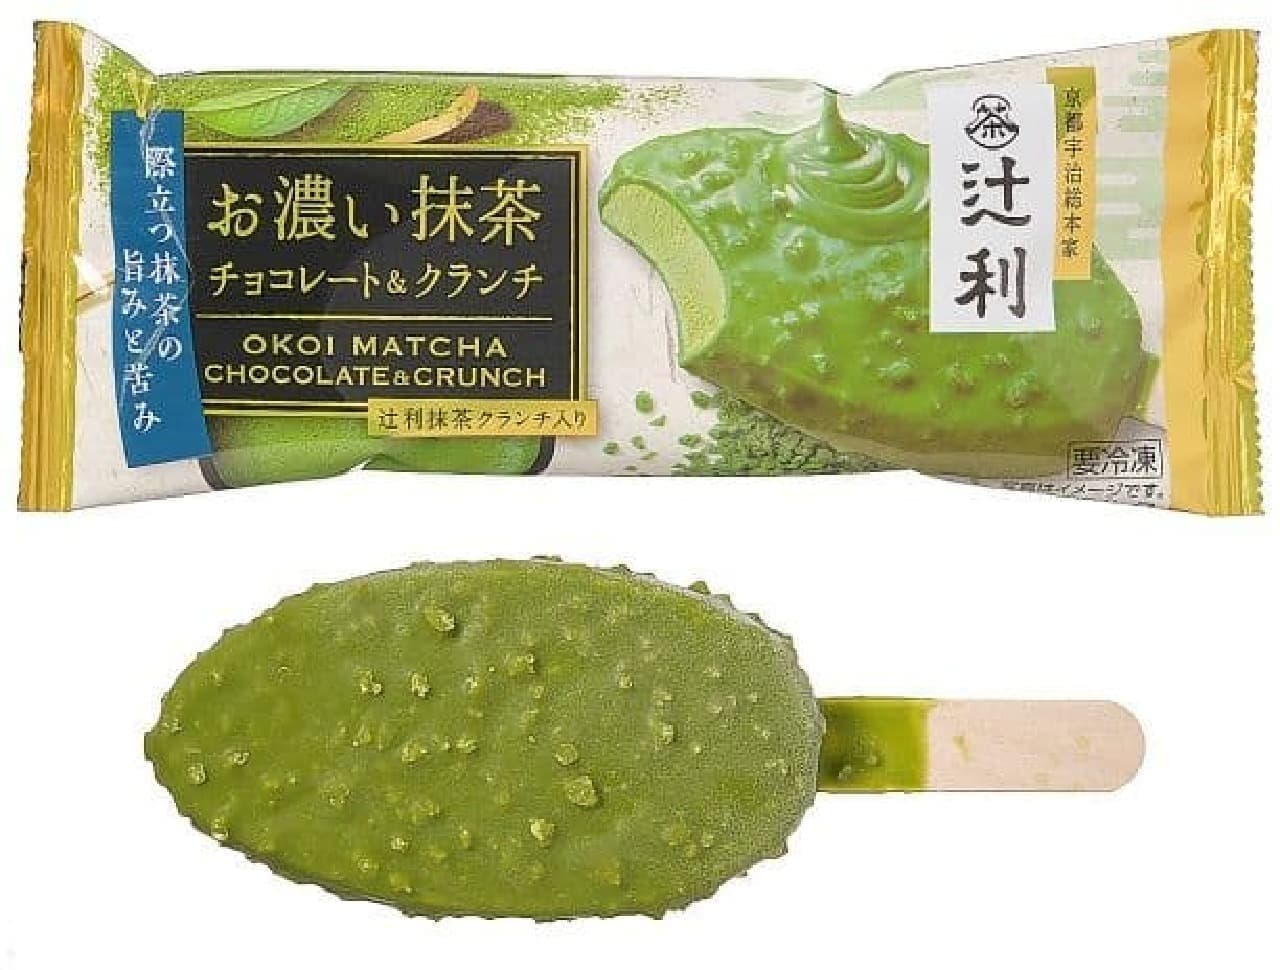 7-ELEVEN "Meiji Tsujiri O-Naoi Matcha Chocolate & Crunch".